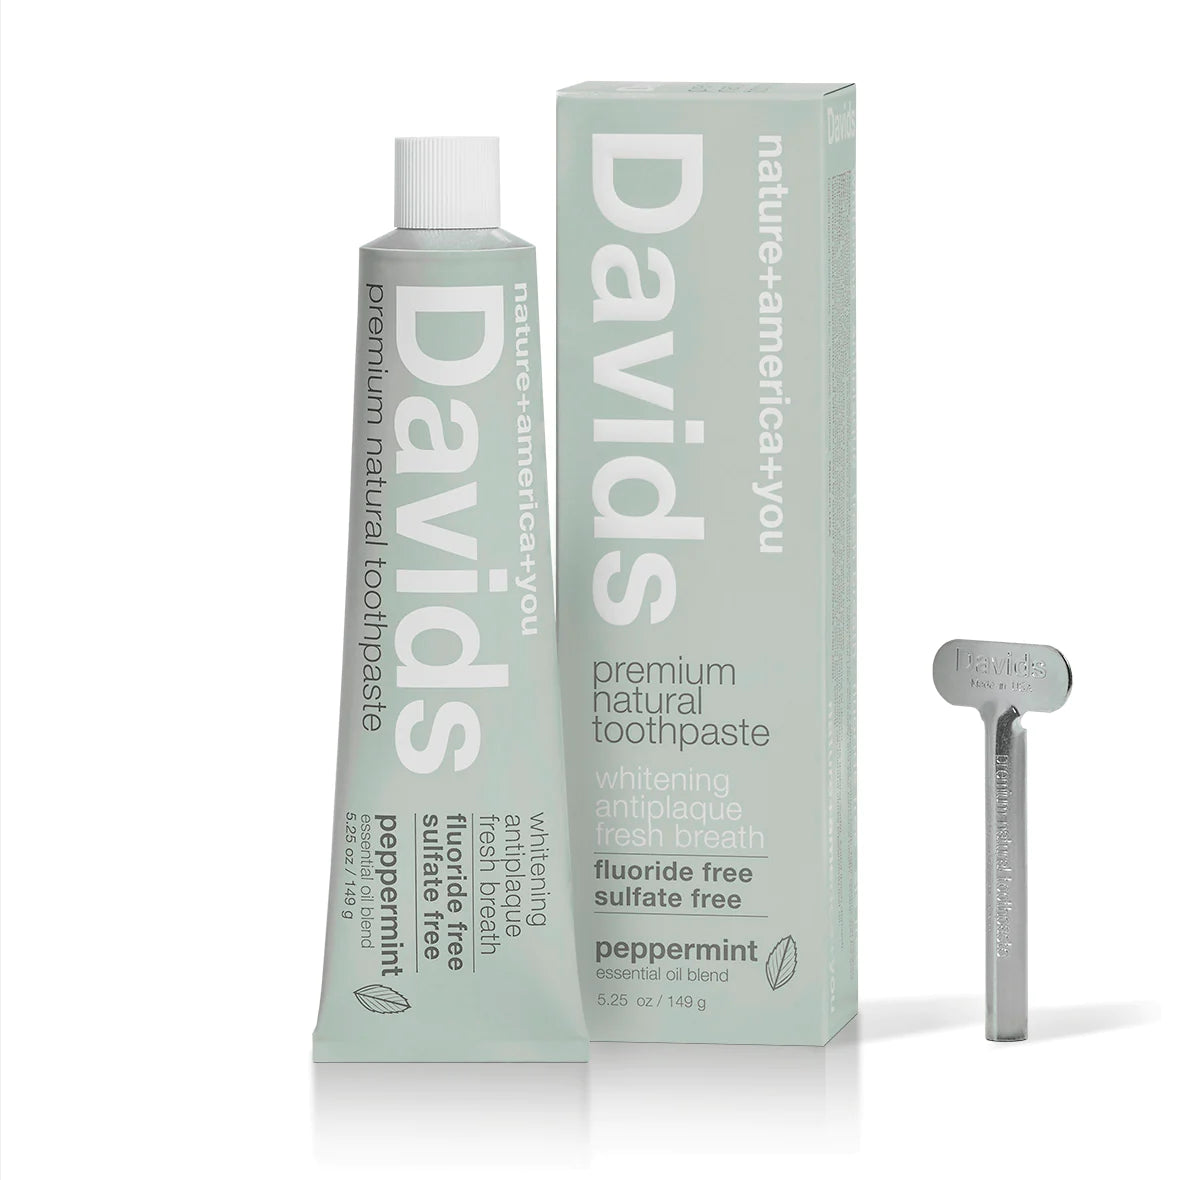 David's Premium Natural Toothpaste - Peppermint